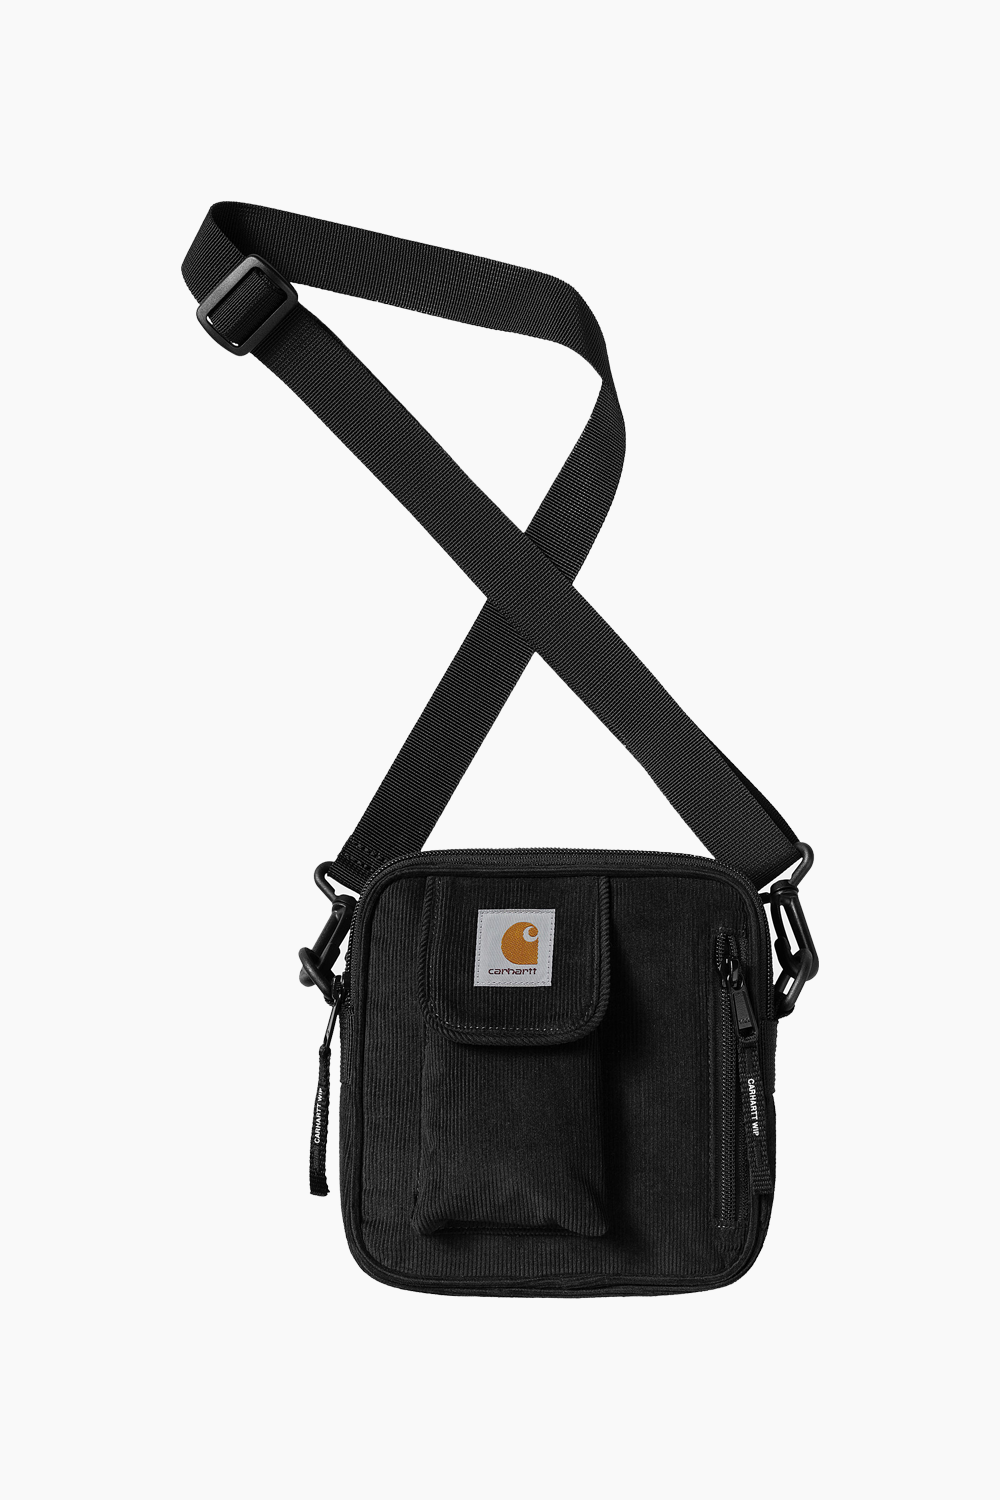 Essentials Cord Bag, Small - Black - Carhartt WIP